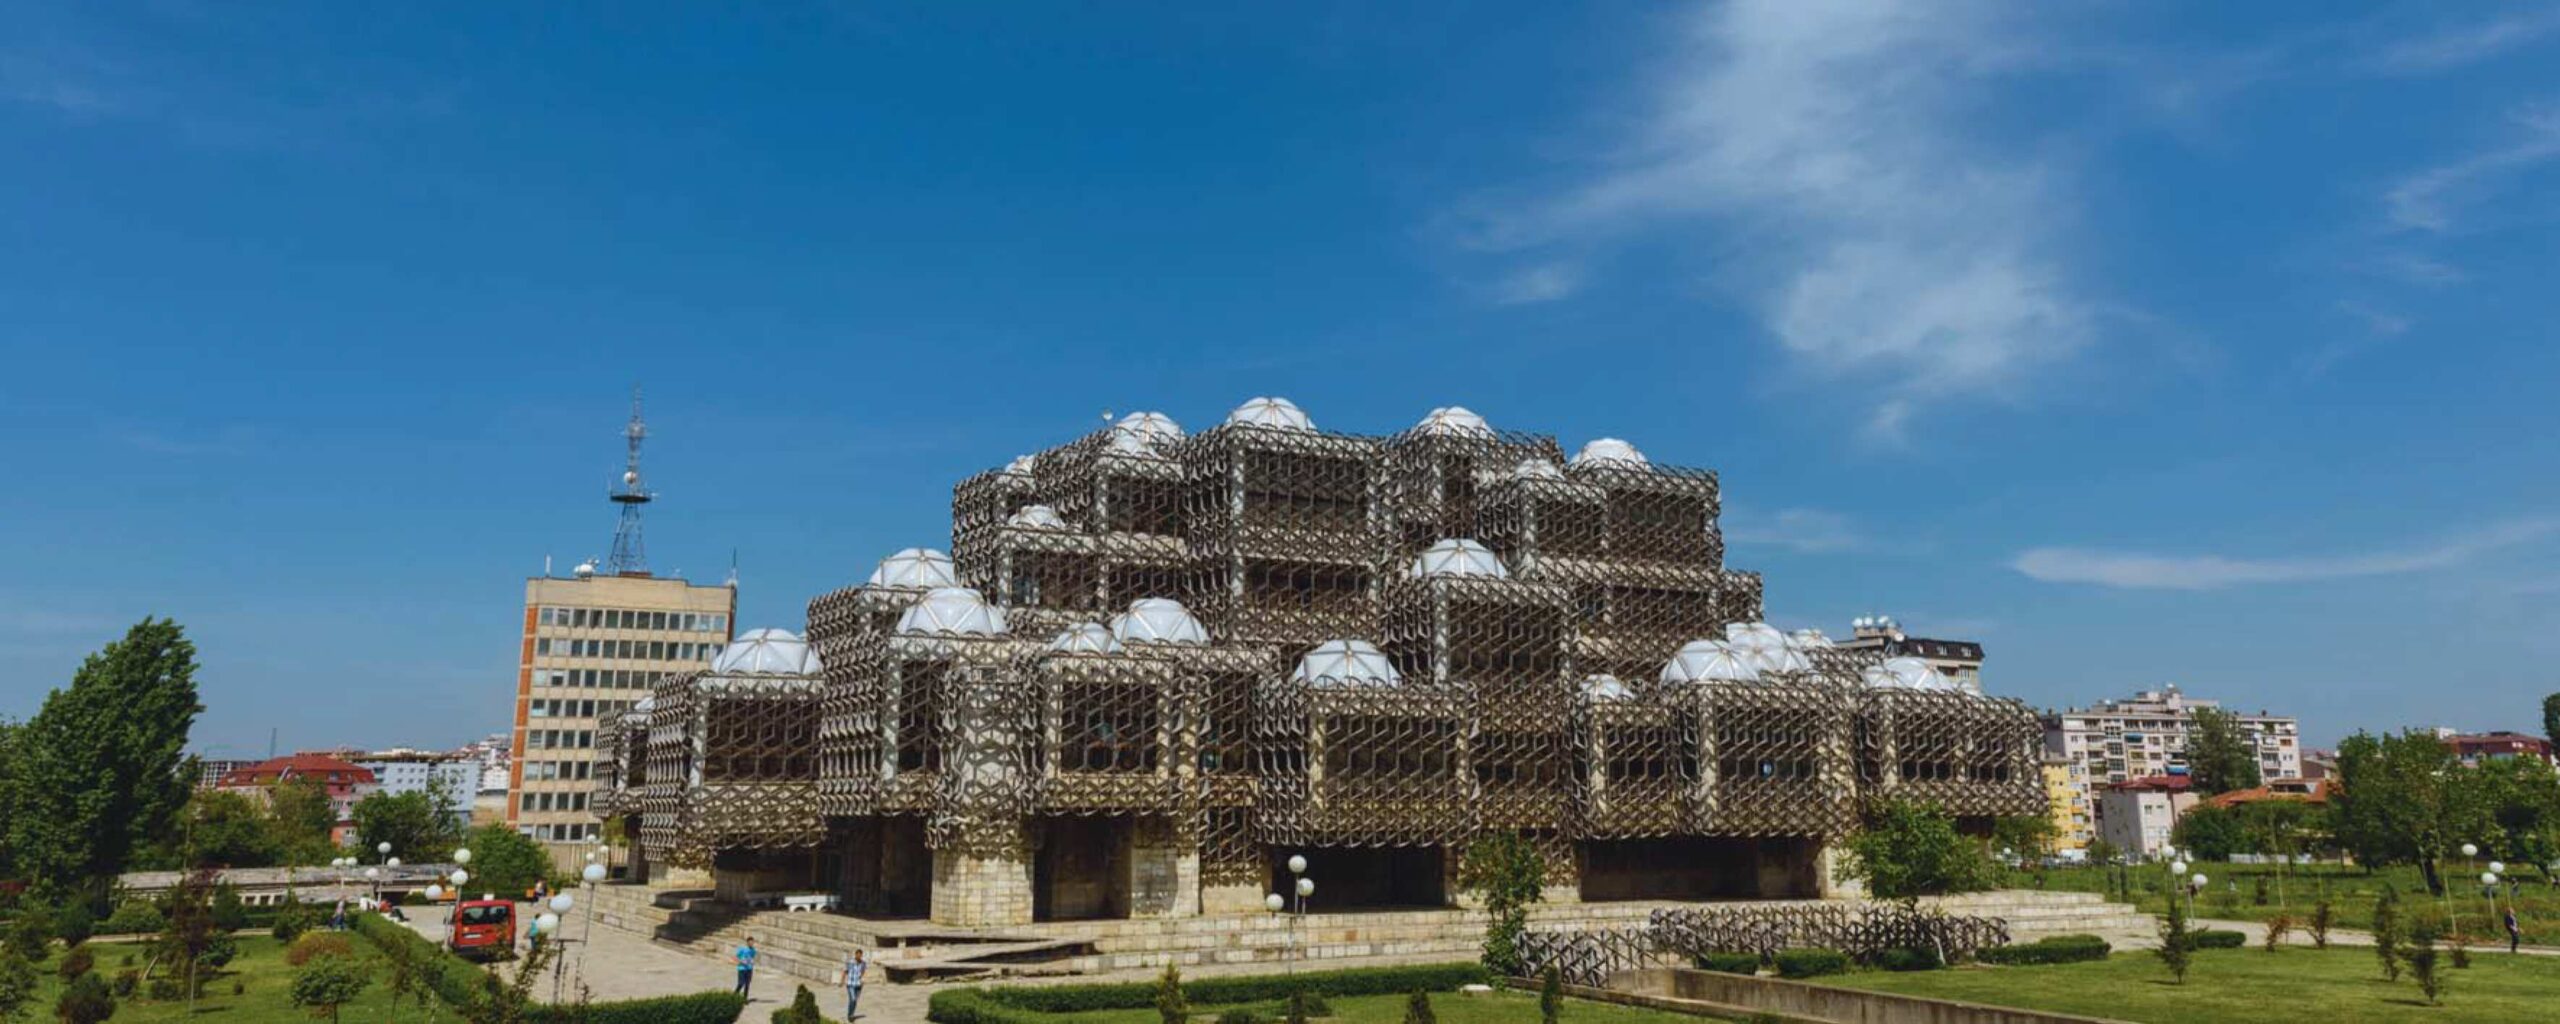 Kosovo National Library designed by Croatian architect Andrija Mutnjakovic